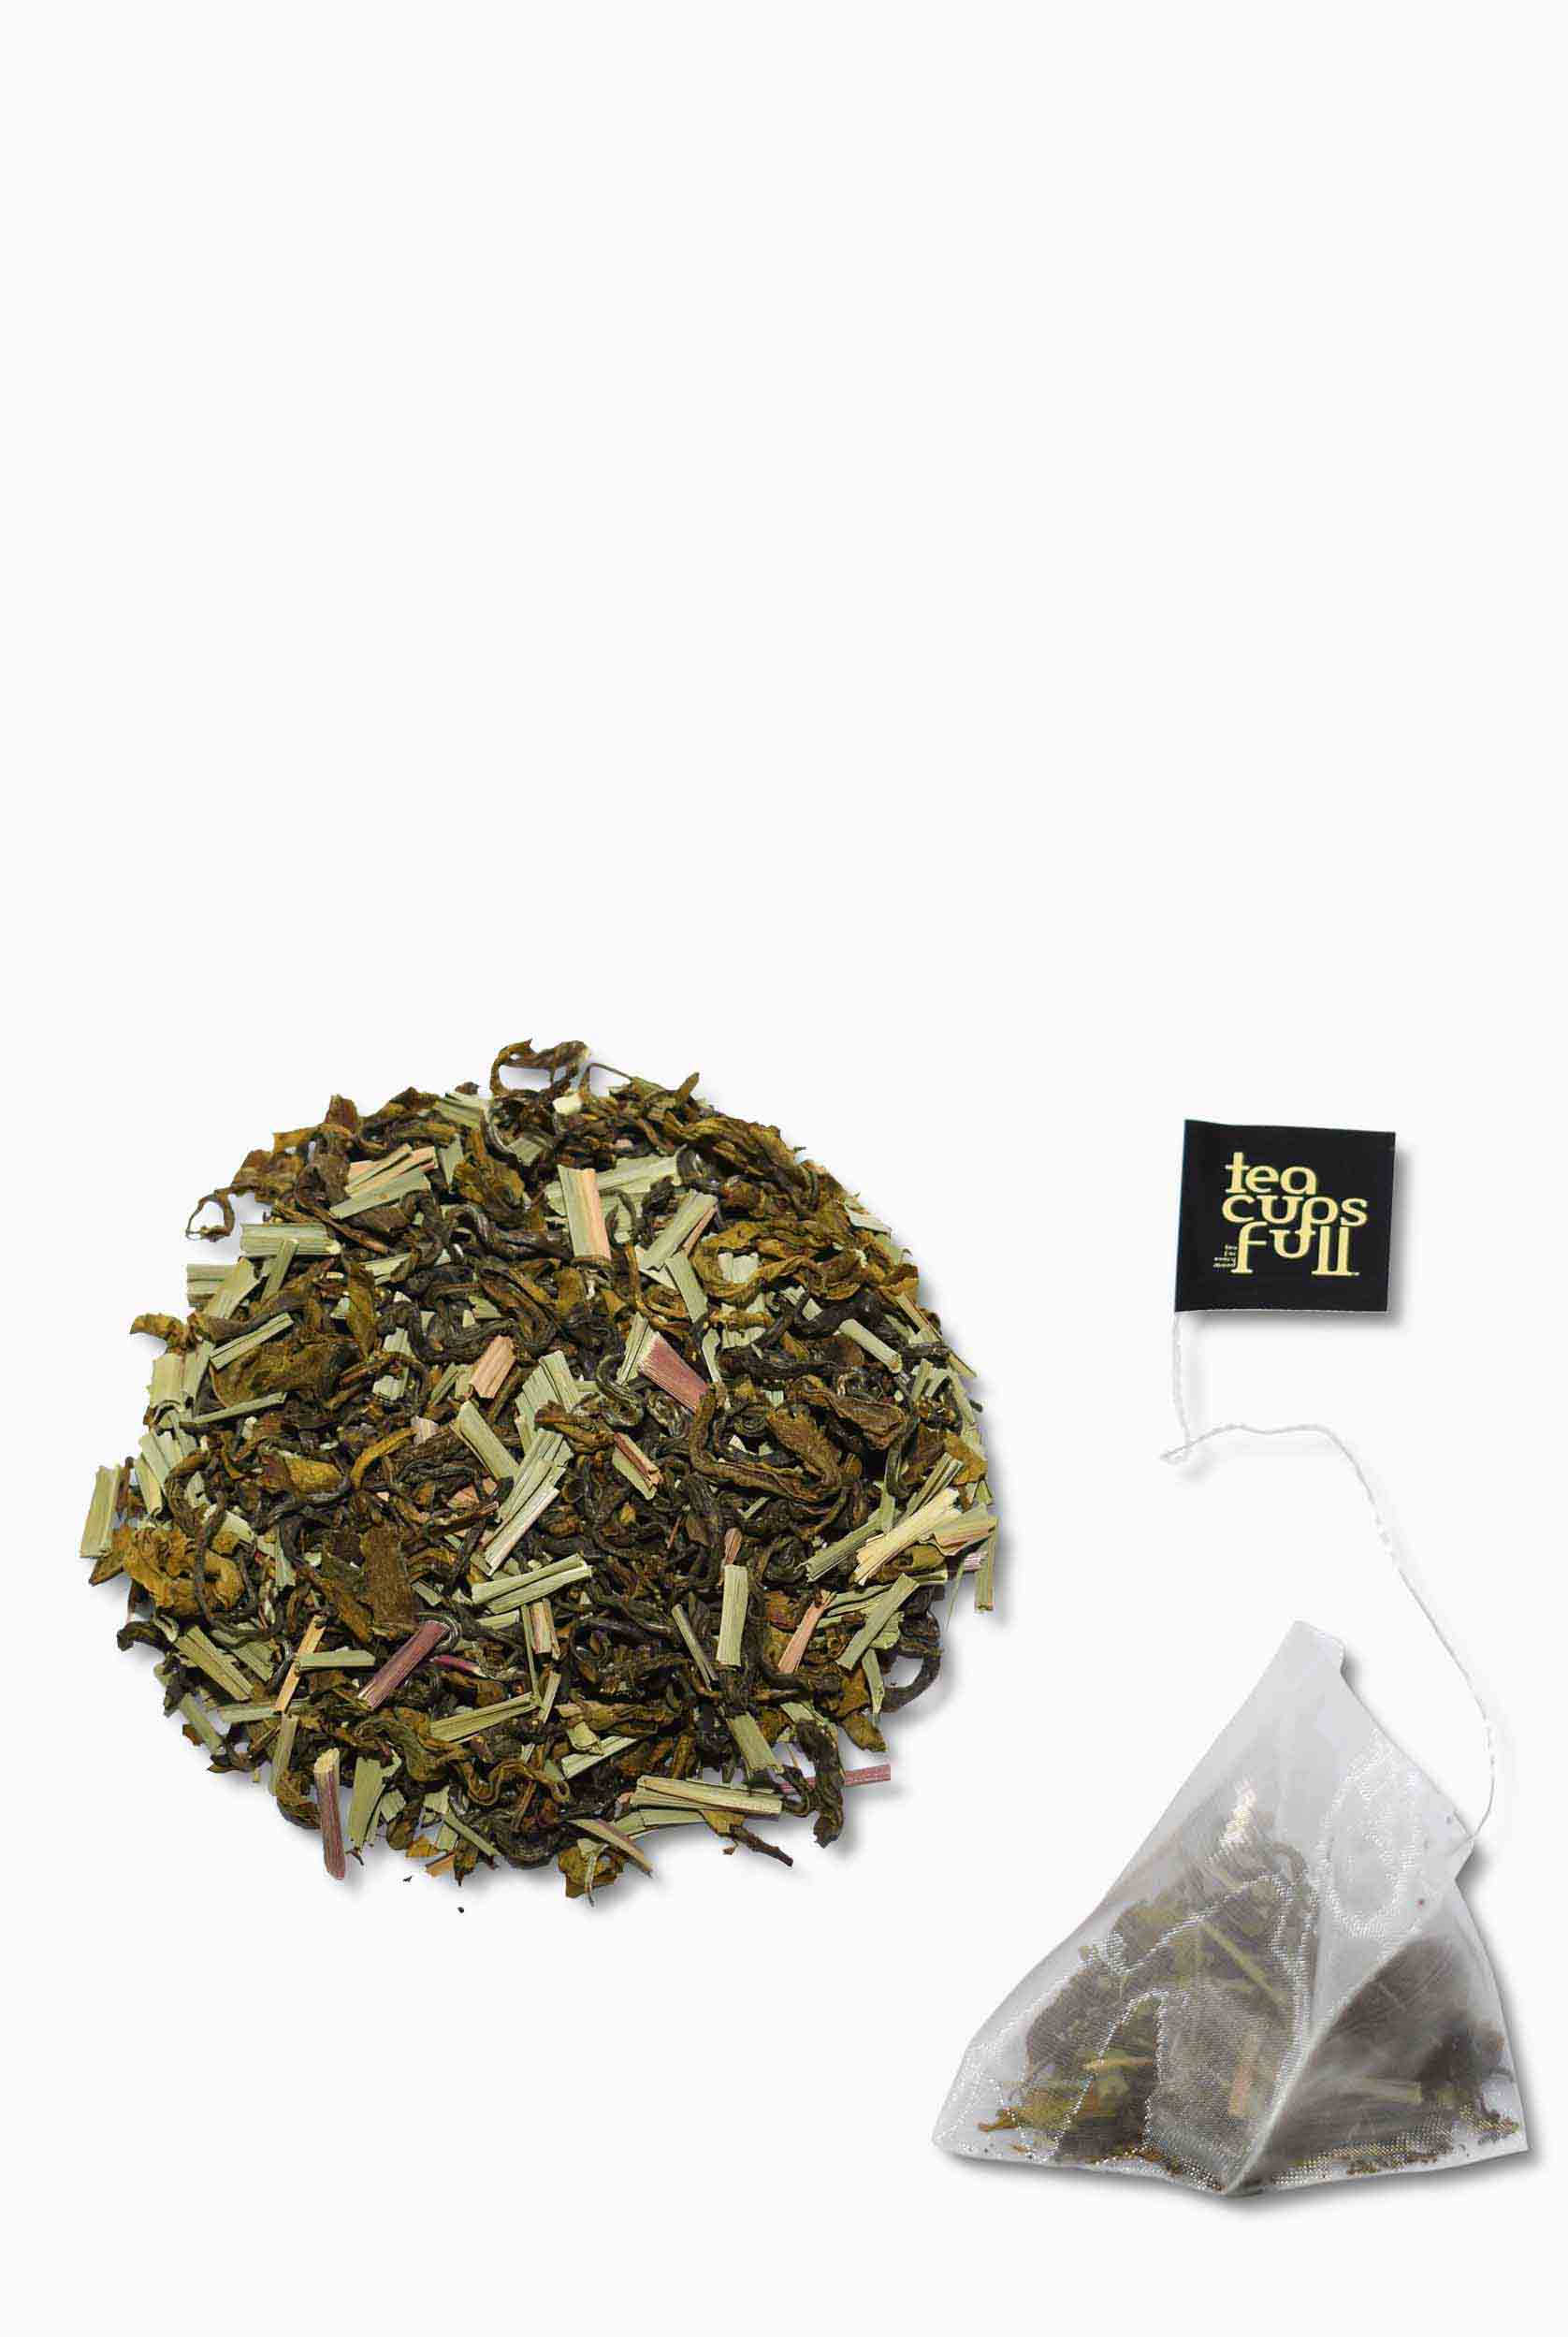 Buy Lemongrass Green Tea Bags Online for Weight Loss